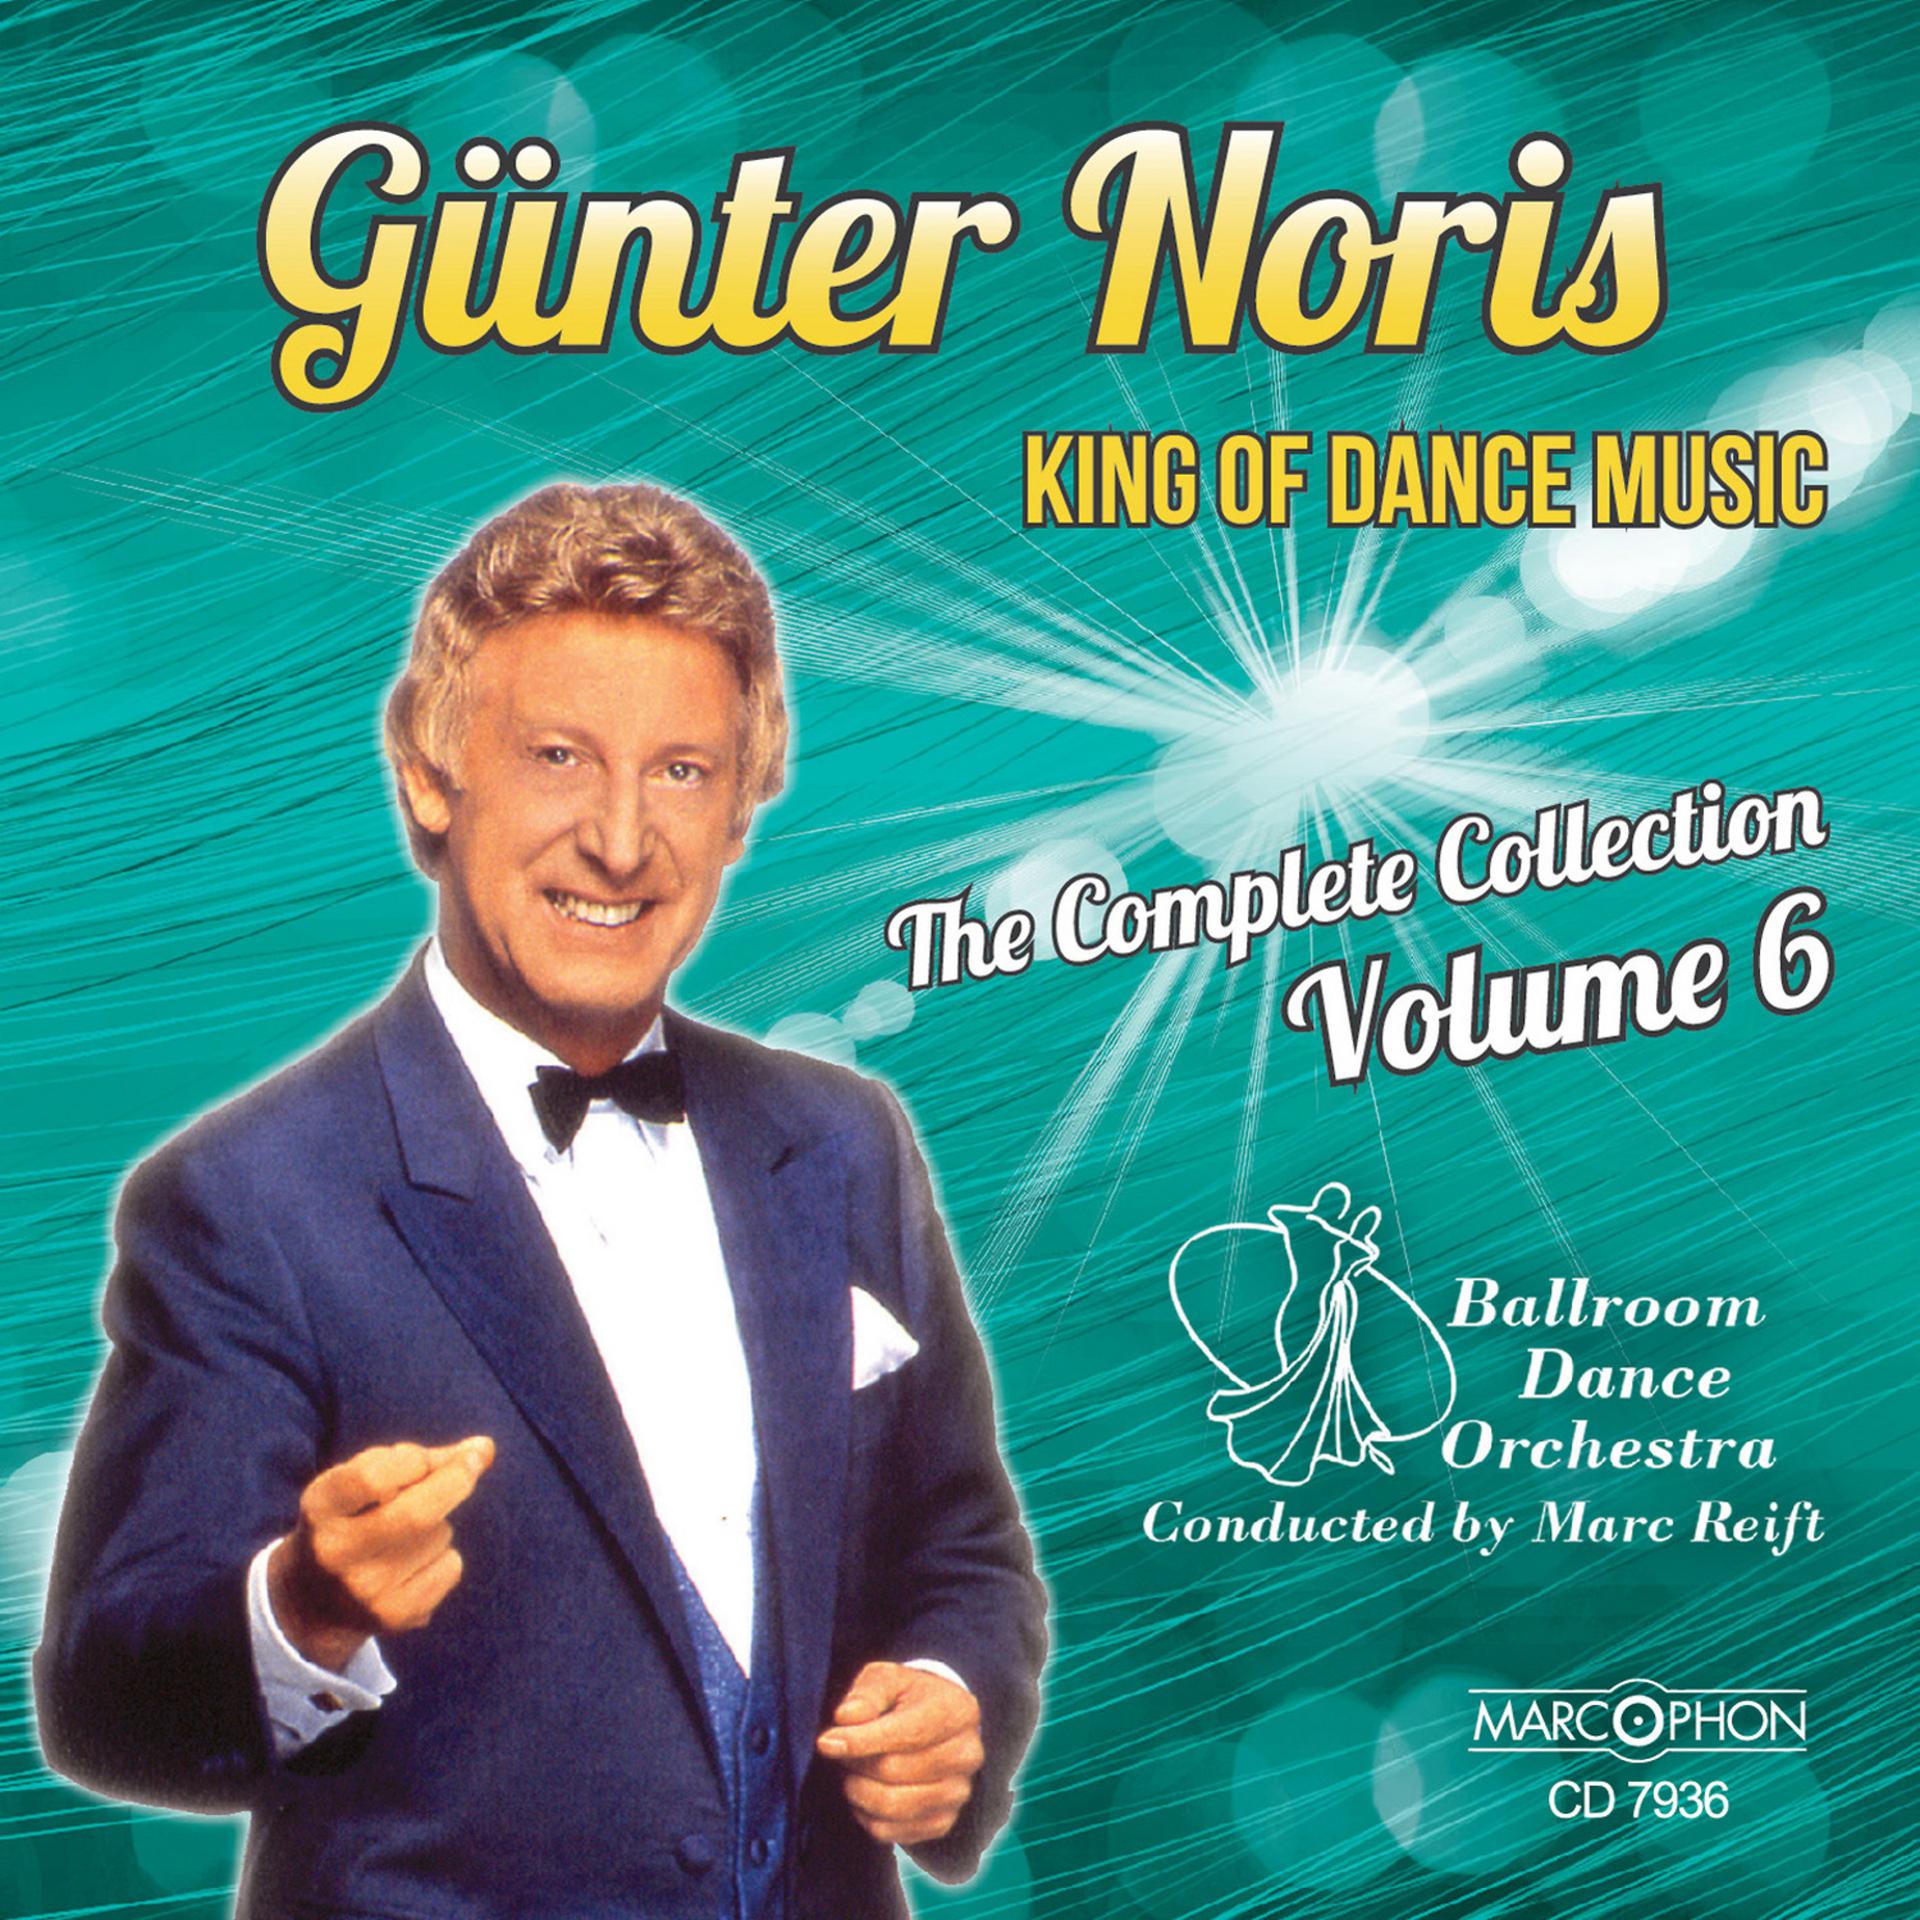 Постер альбома Günter Noris "King of Dance Music" The Complete Collection Volume 6